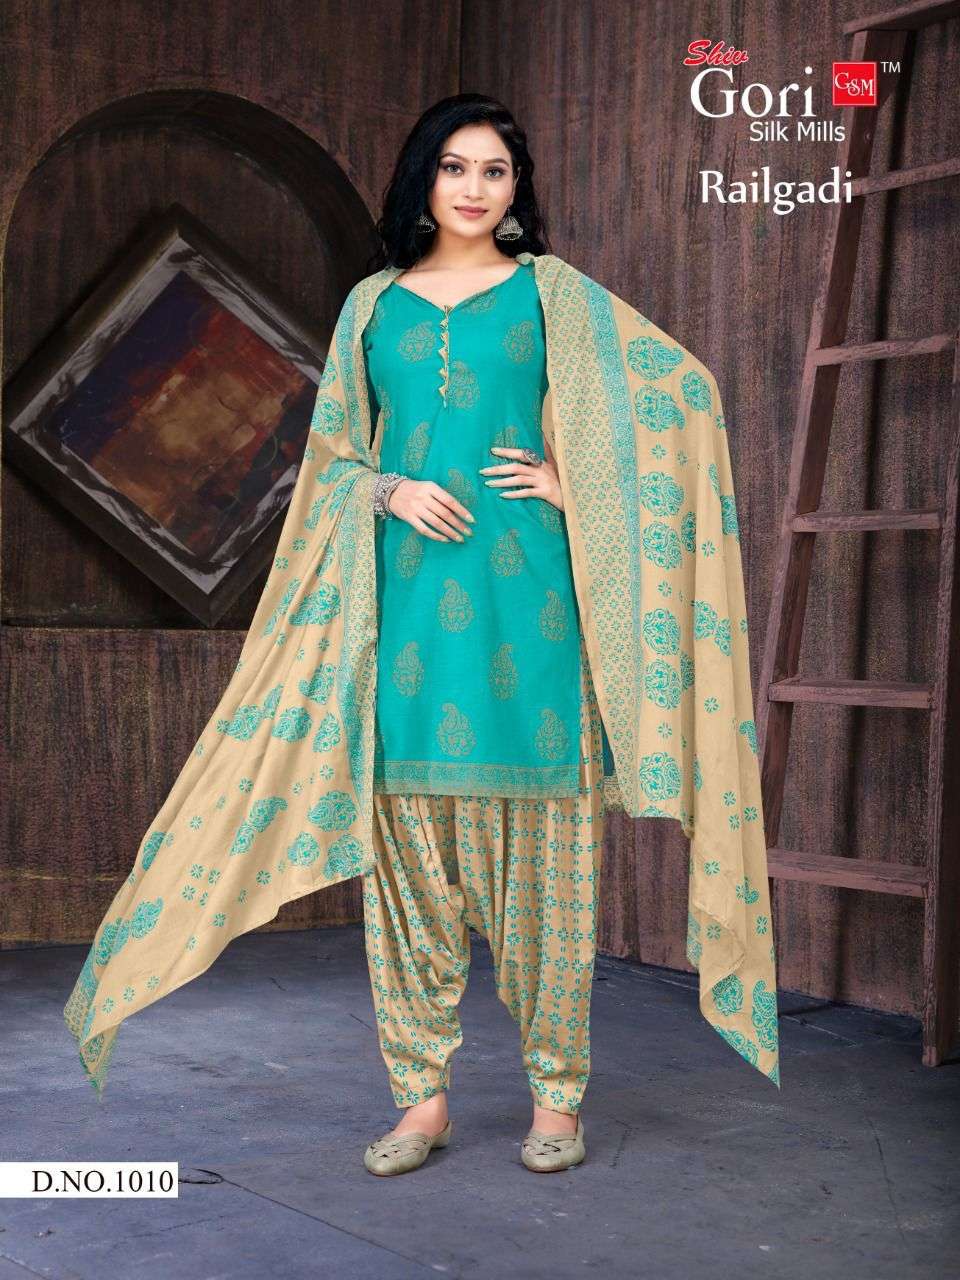 Shiv Gori Railgadi printed Cotton Unstitched Dress material catalog Supplier